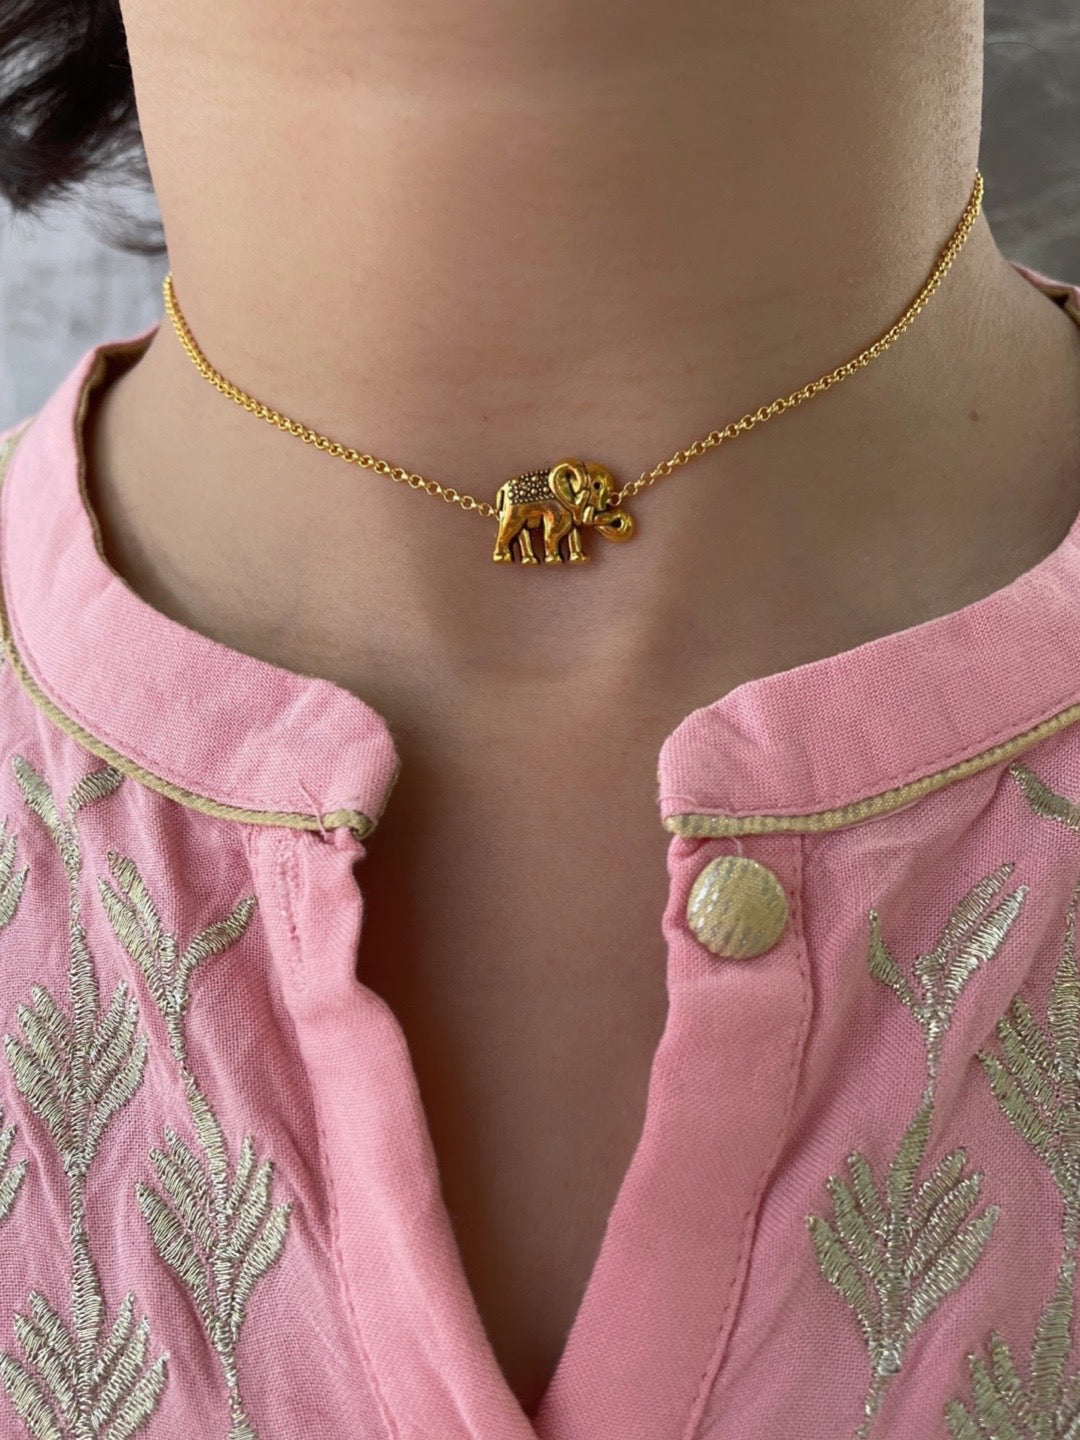 Gold Plated Choker Necklace Elephant Design Pendant